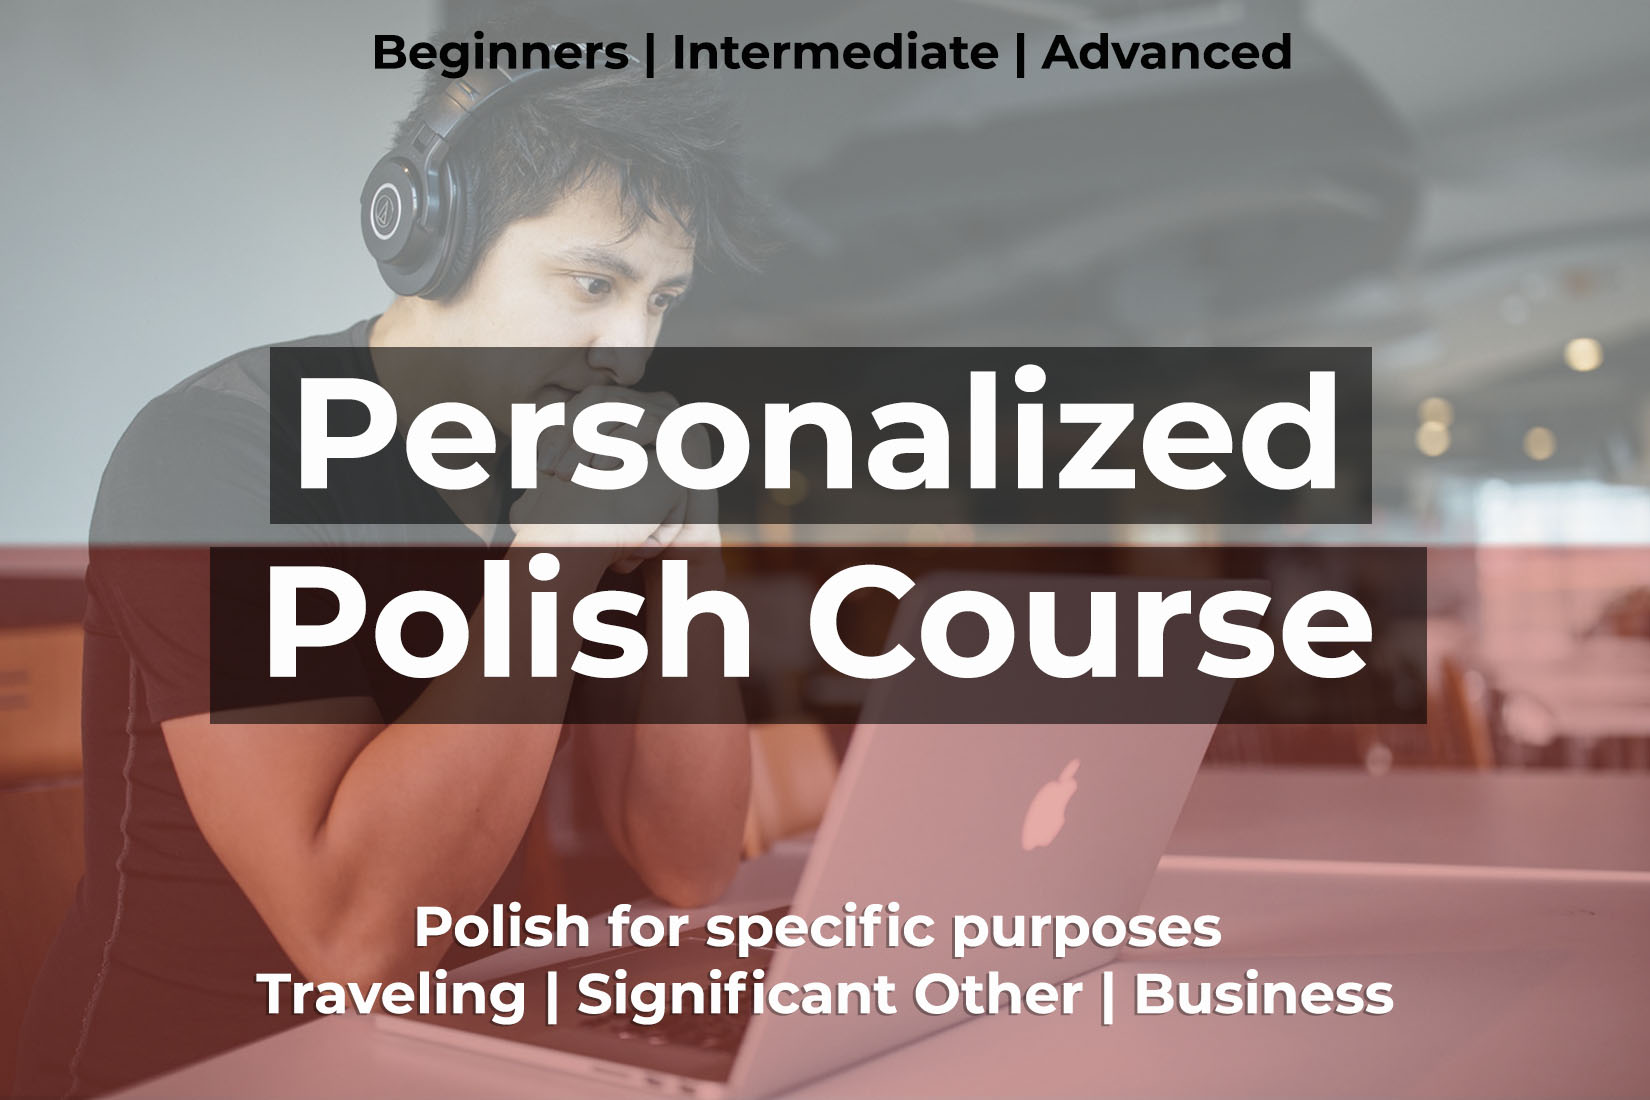 Personalized Polish Course